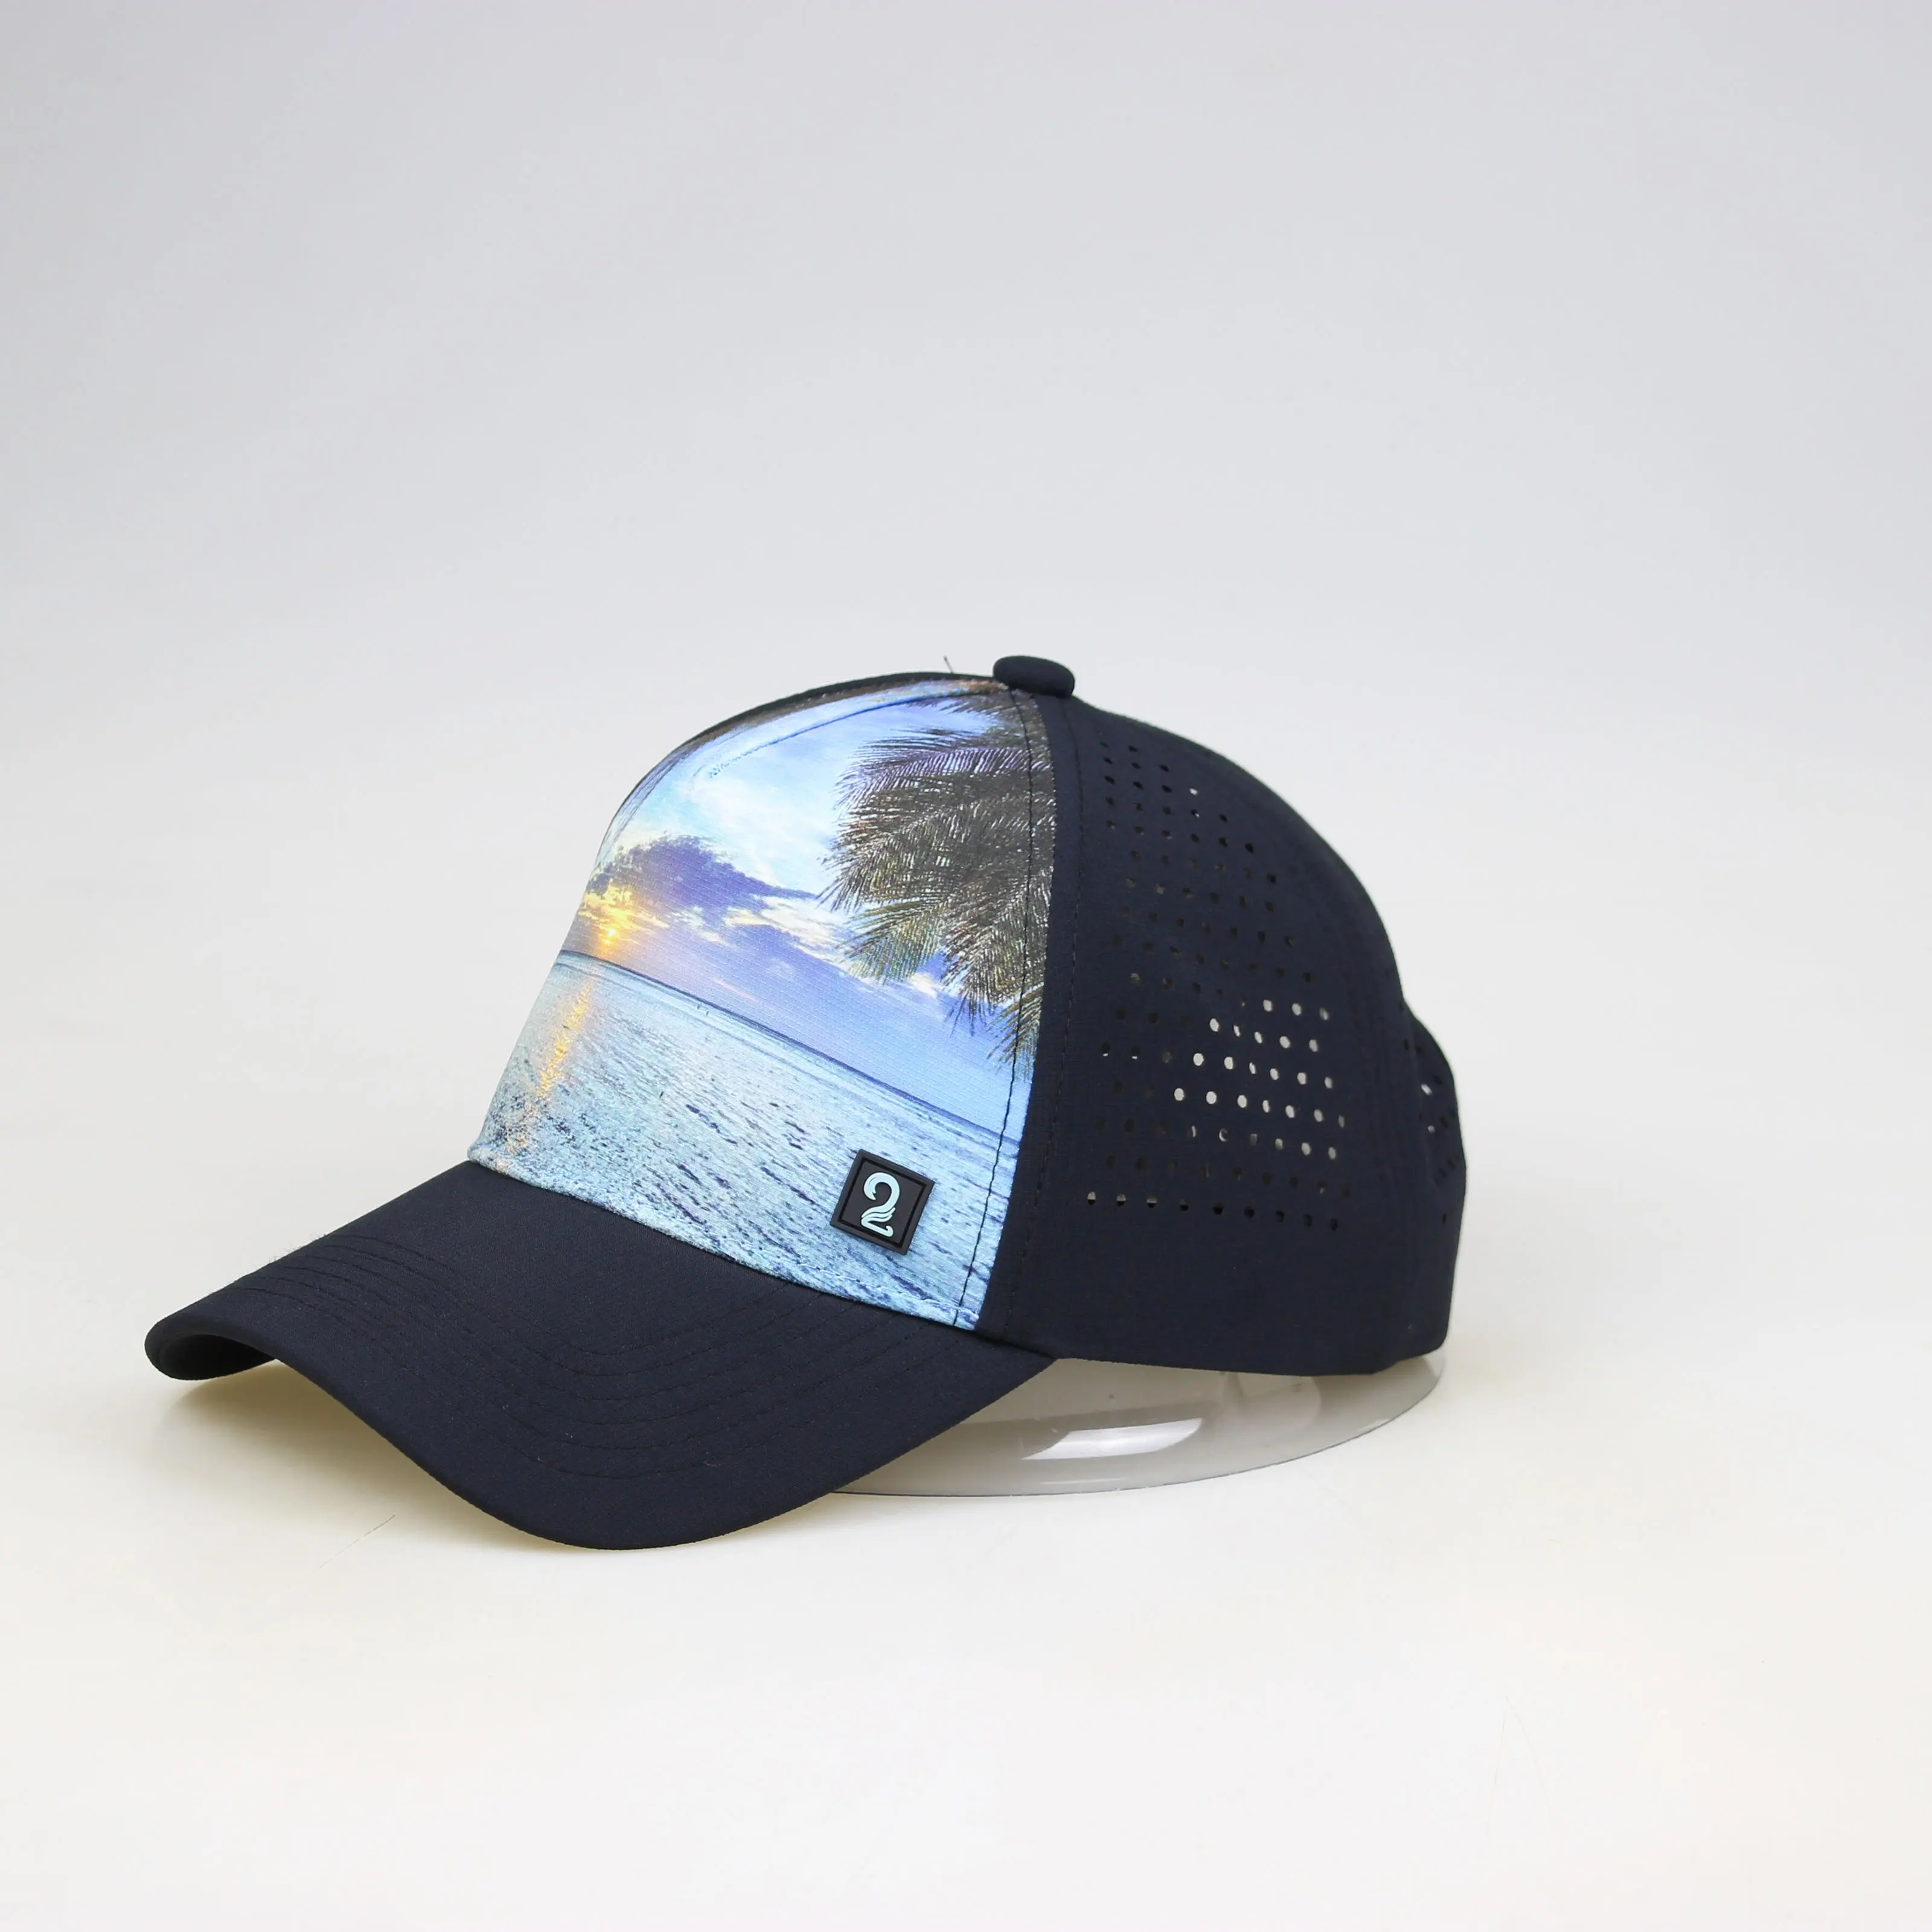 Gorra de Melin con parche de goma con orificio láser de alta calidad, gorra de camionero impermeable de 5 paneles personalizada